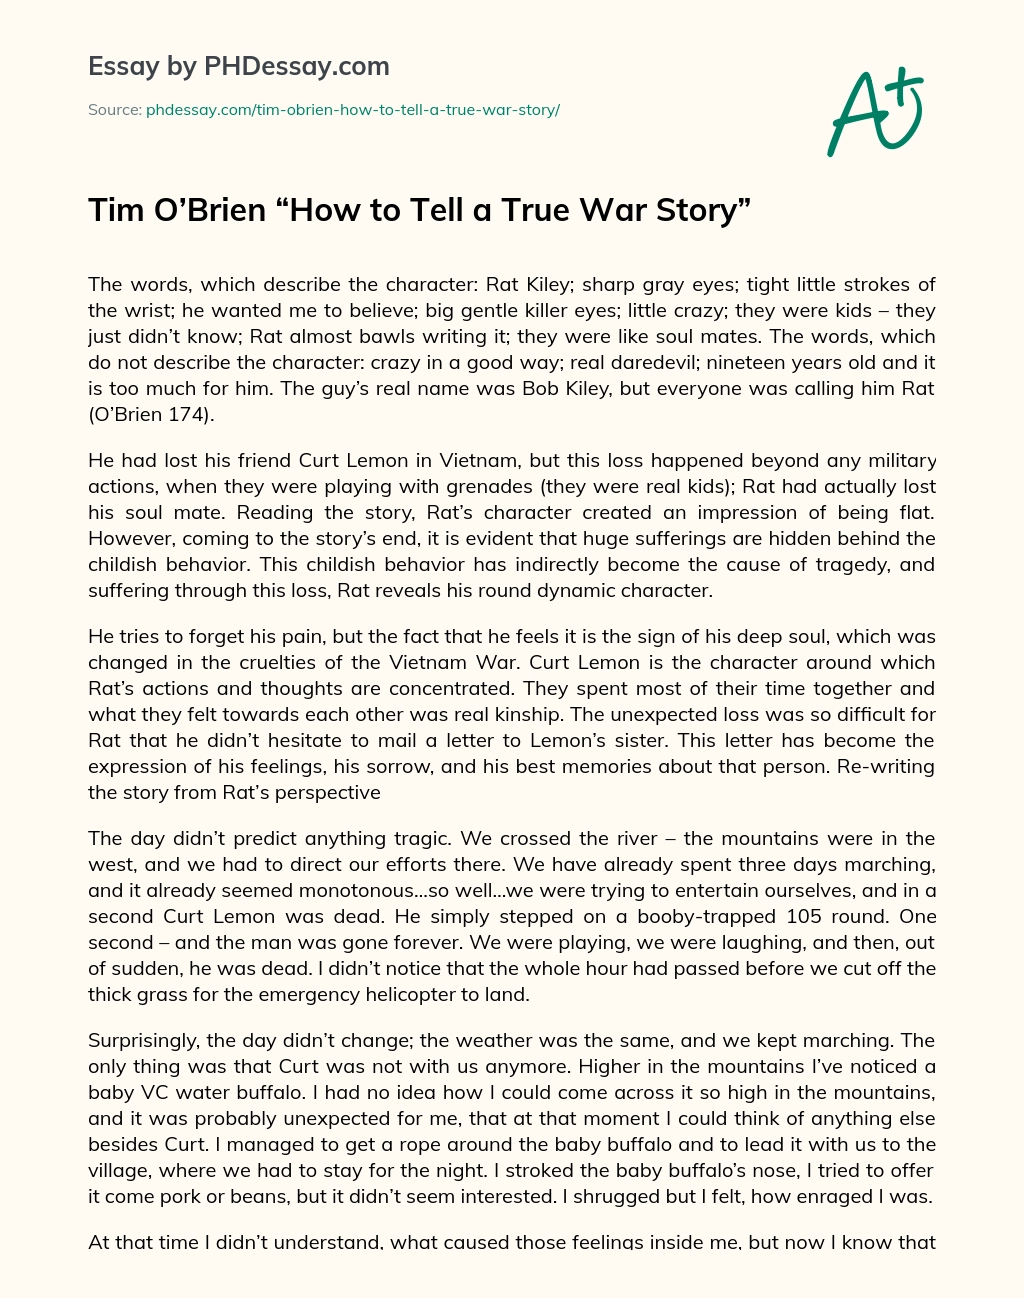 Tim O’Brien “How to Tell a True War Story” essay